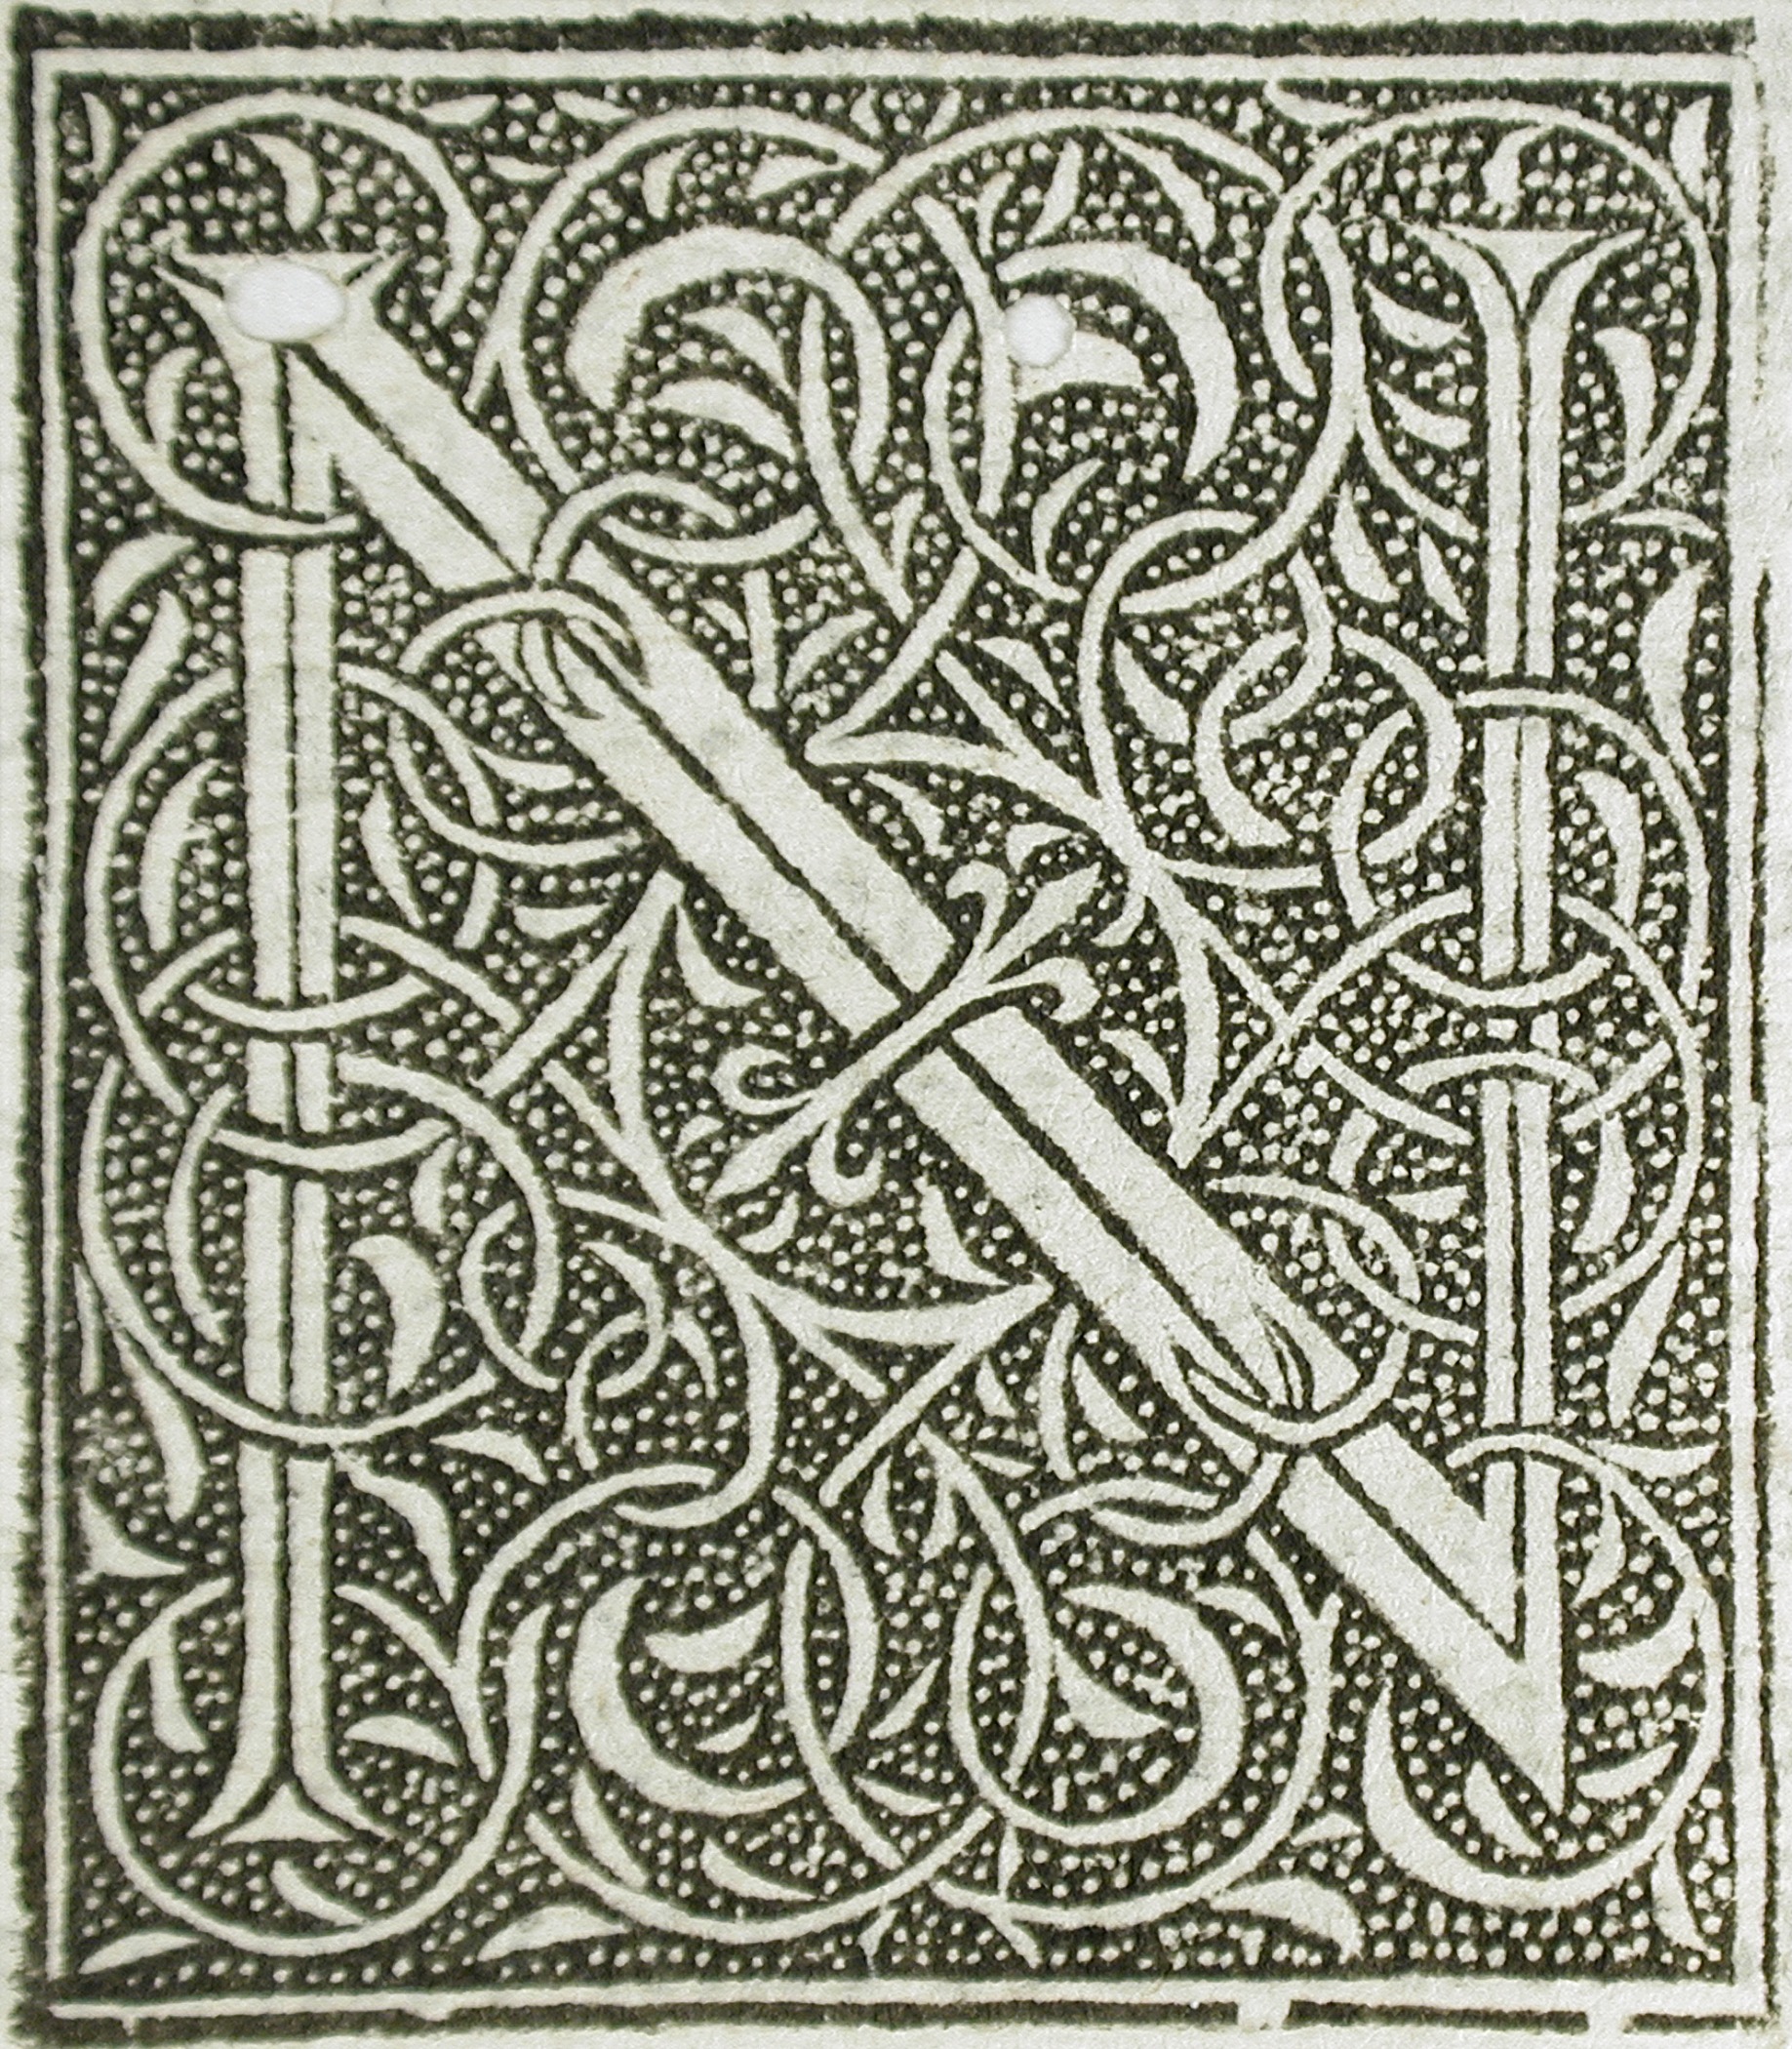 File Sixteen Ornamental Letters C E M N Q S V Lacma 53 31 2 12a P 12 Of 16 Jpg Wikimedia Commons